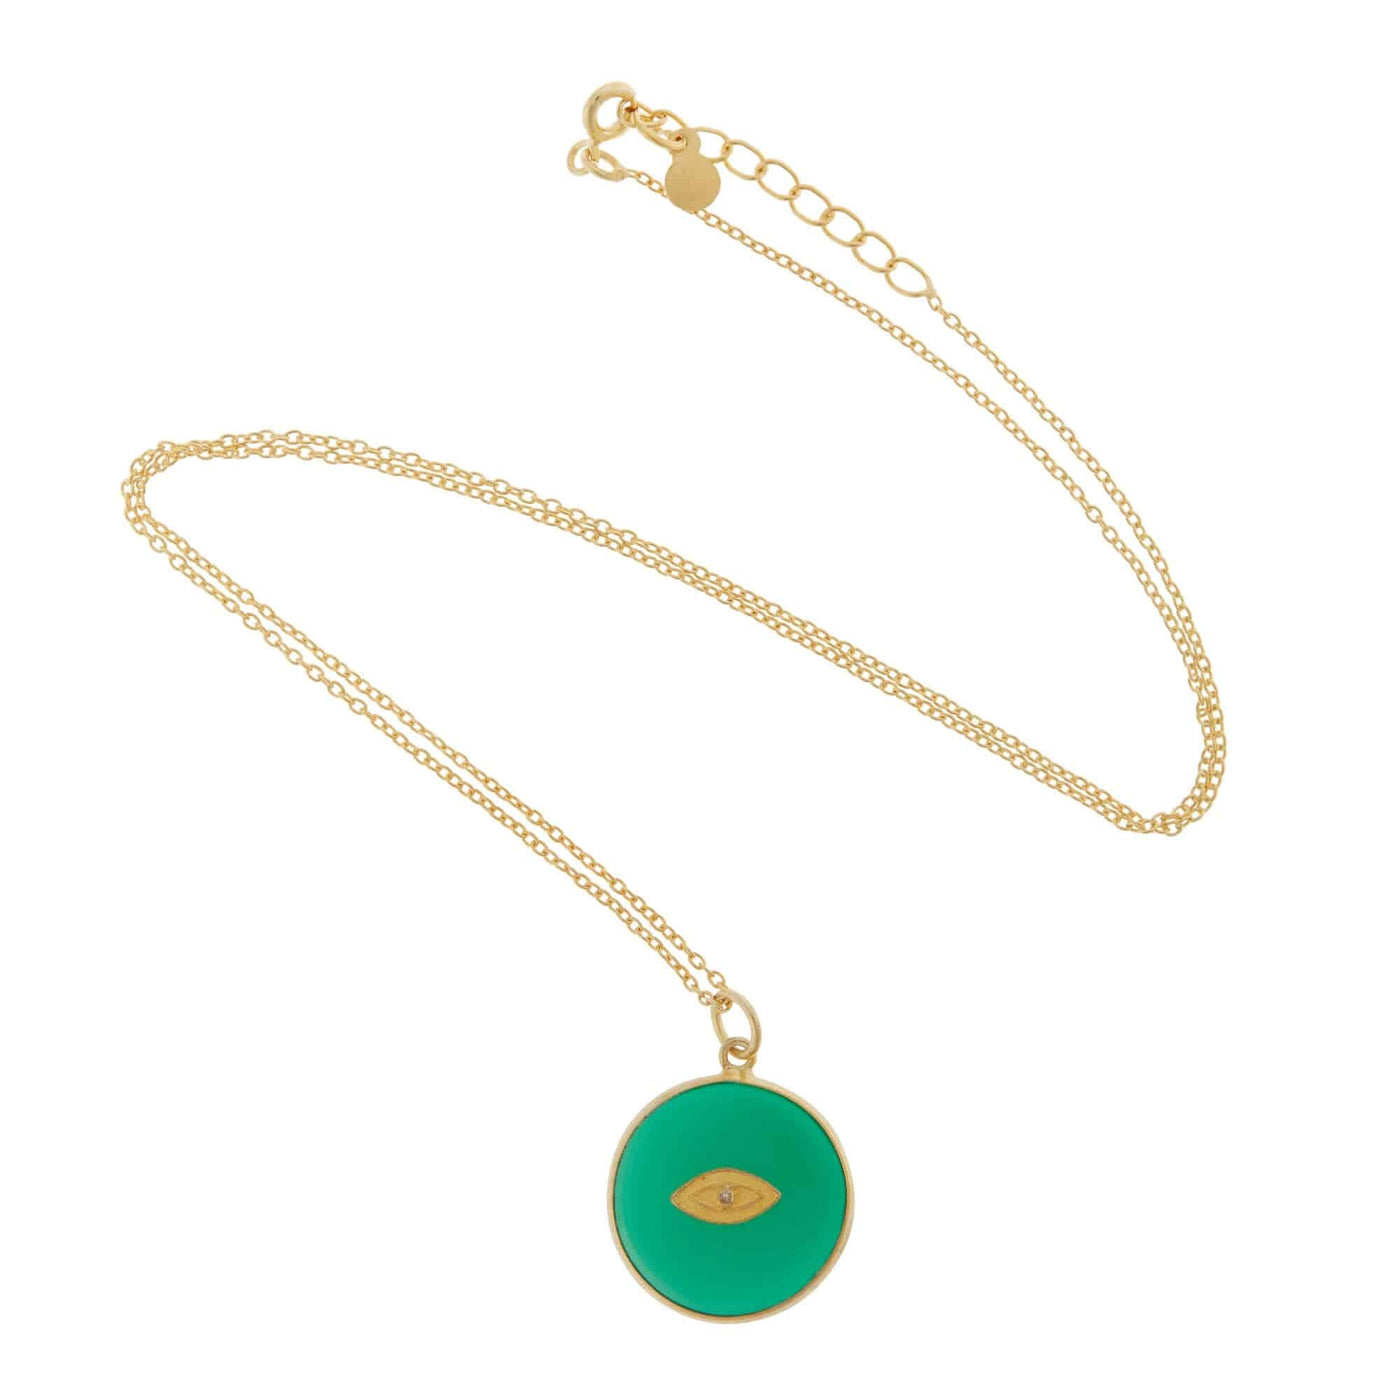 All Seeing Round Eye Necklace with Green Onyx - Eye M by Ileana Makri